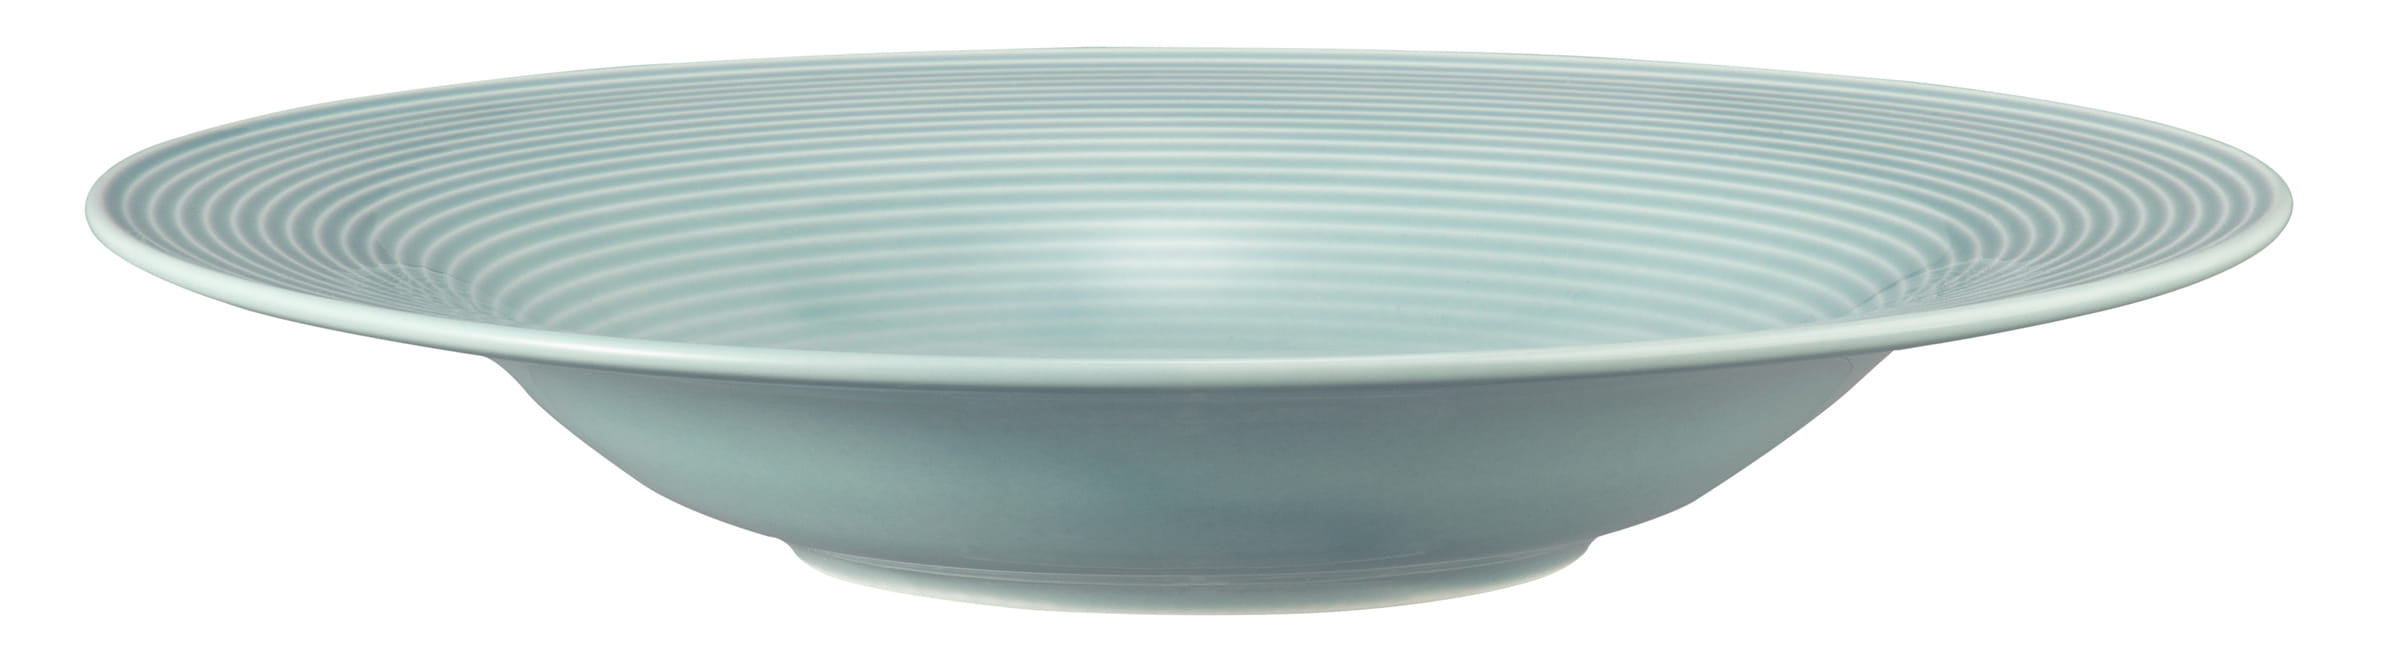 Seltmann Porzellan Beat Arktisblau Pasta-/Salatteller 27,5 cm